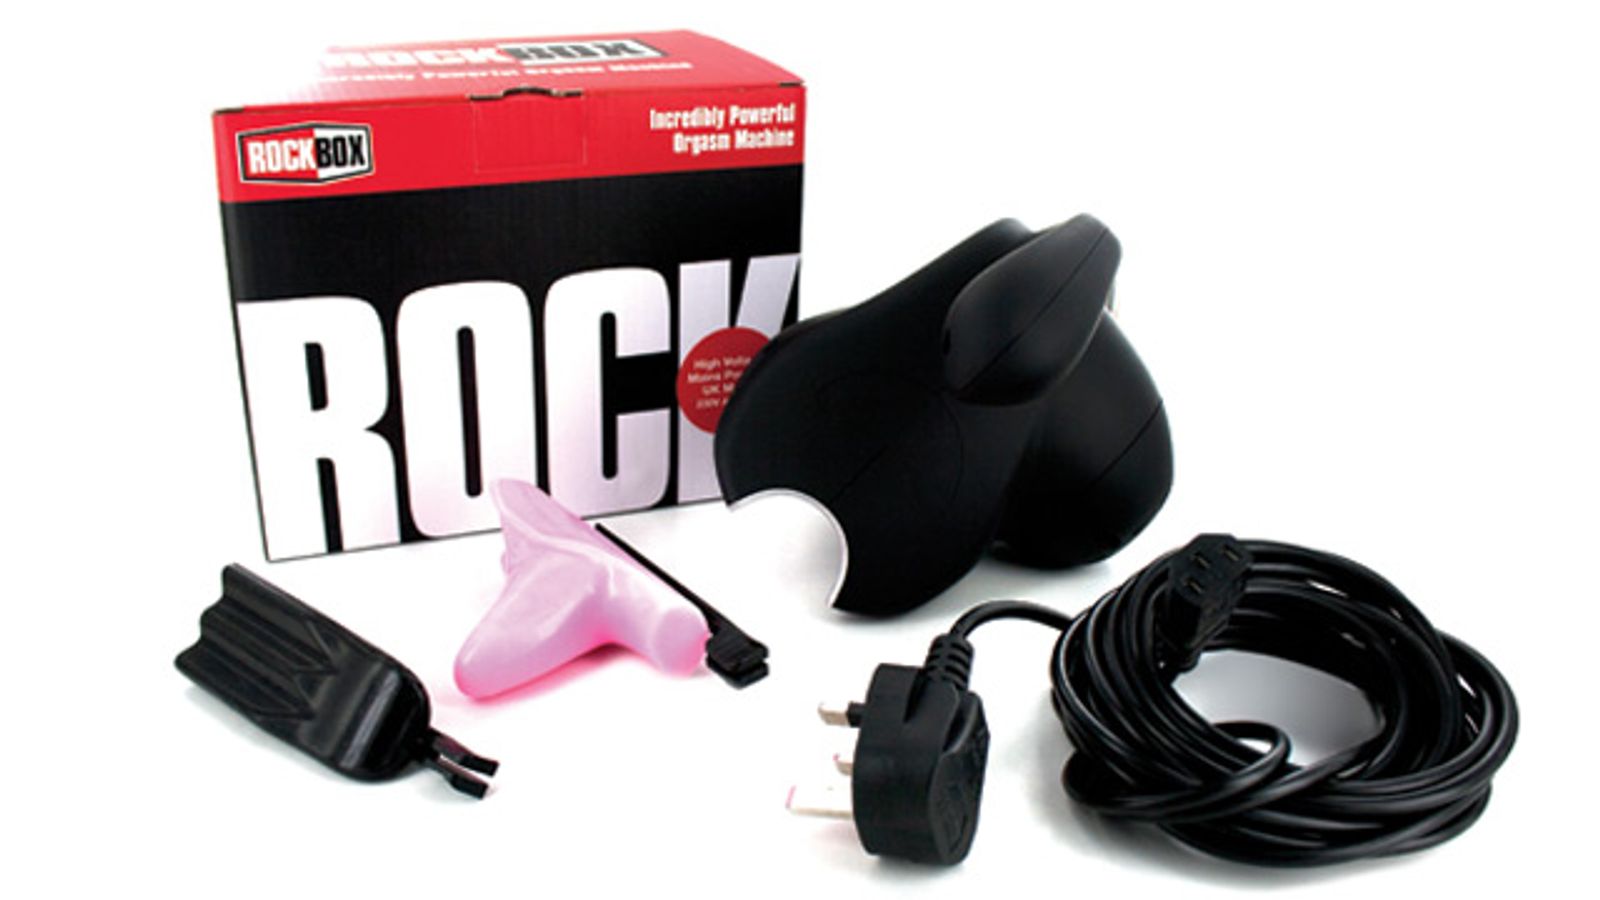 Entrenue Brings Lovehoney’s Rock Box to U.S. Retail Market